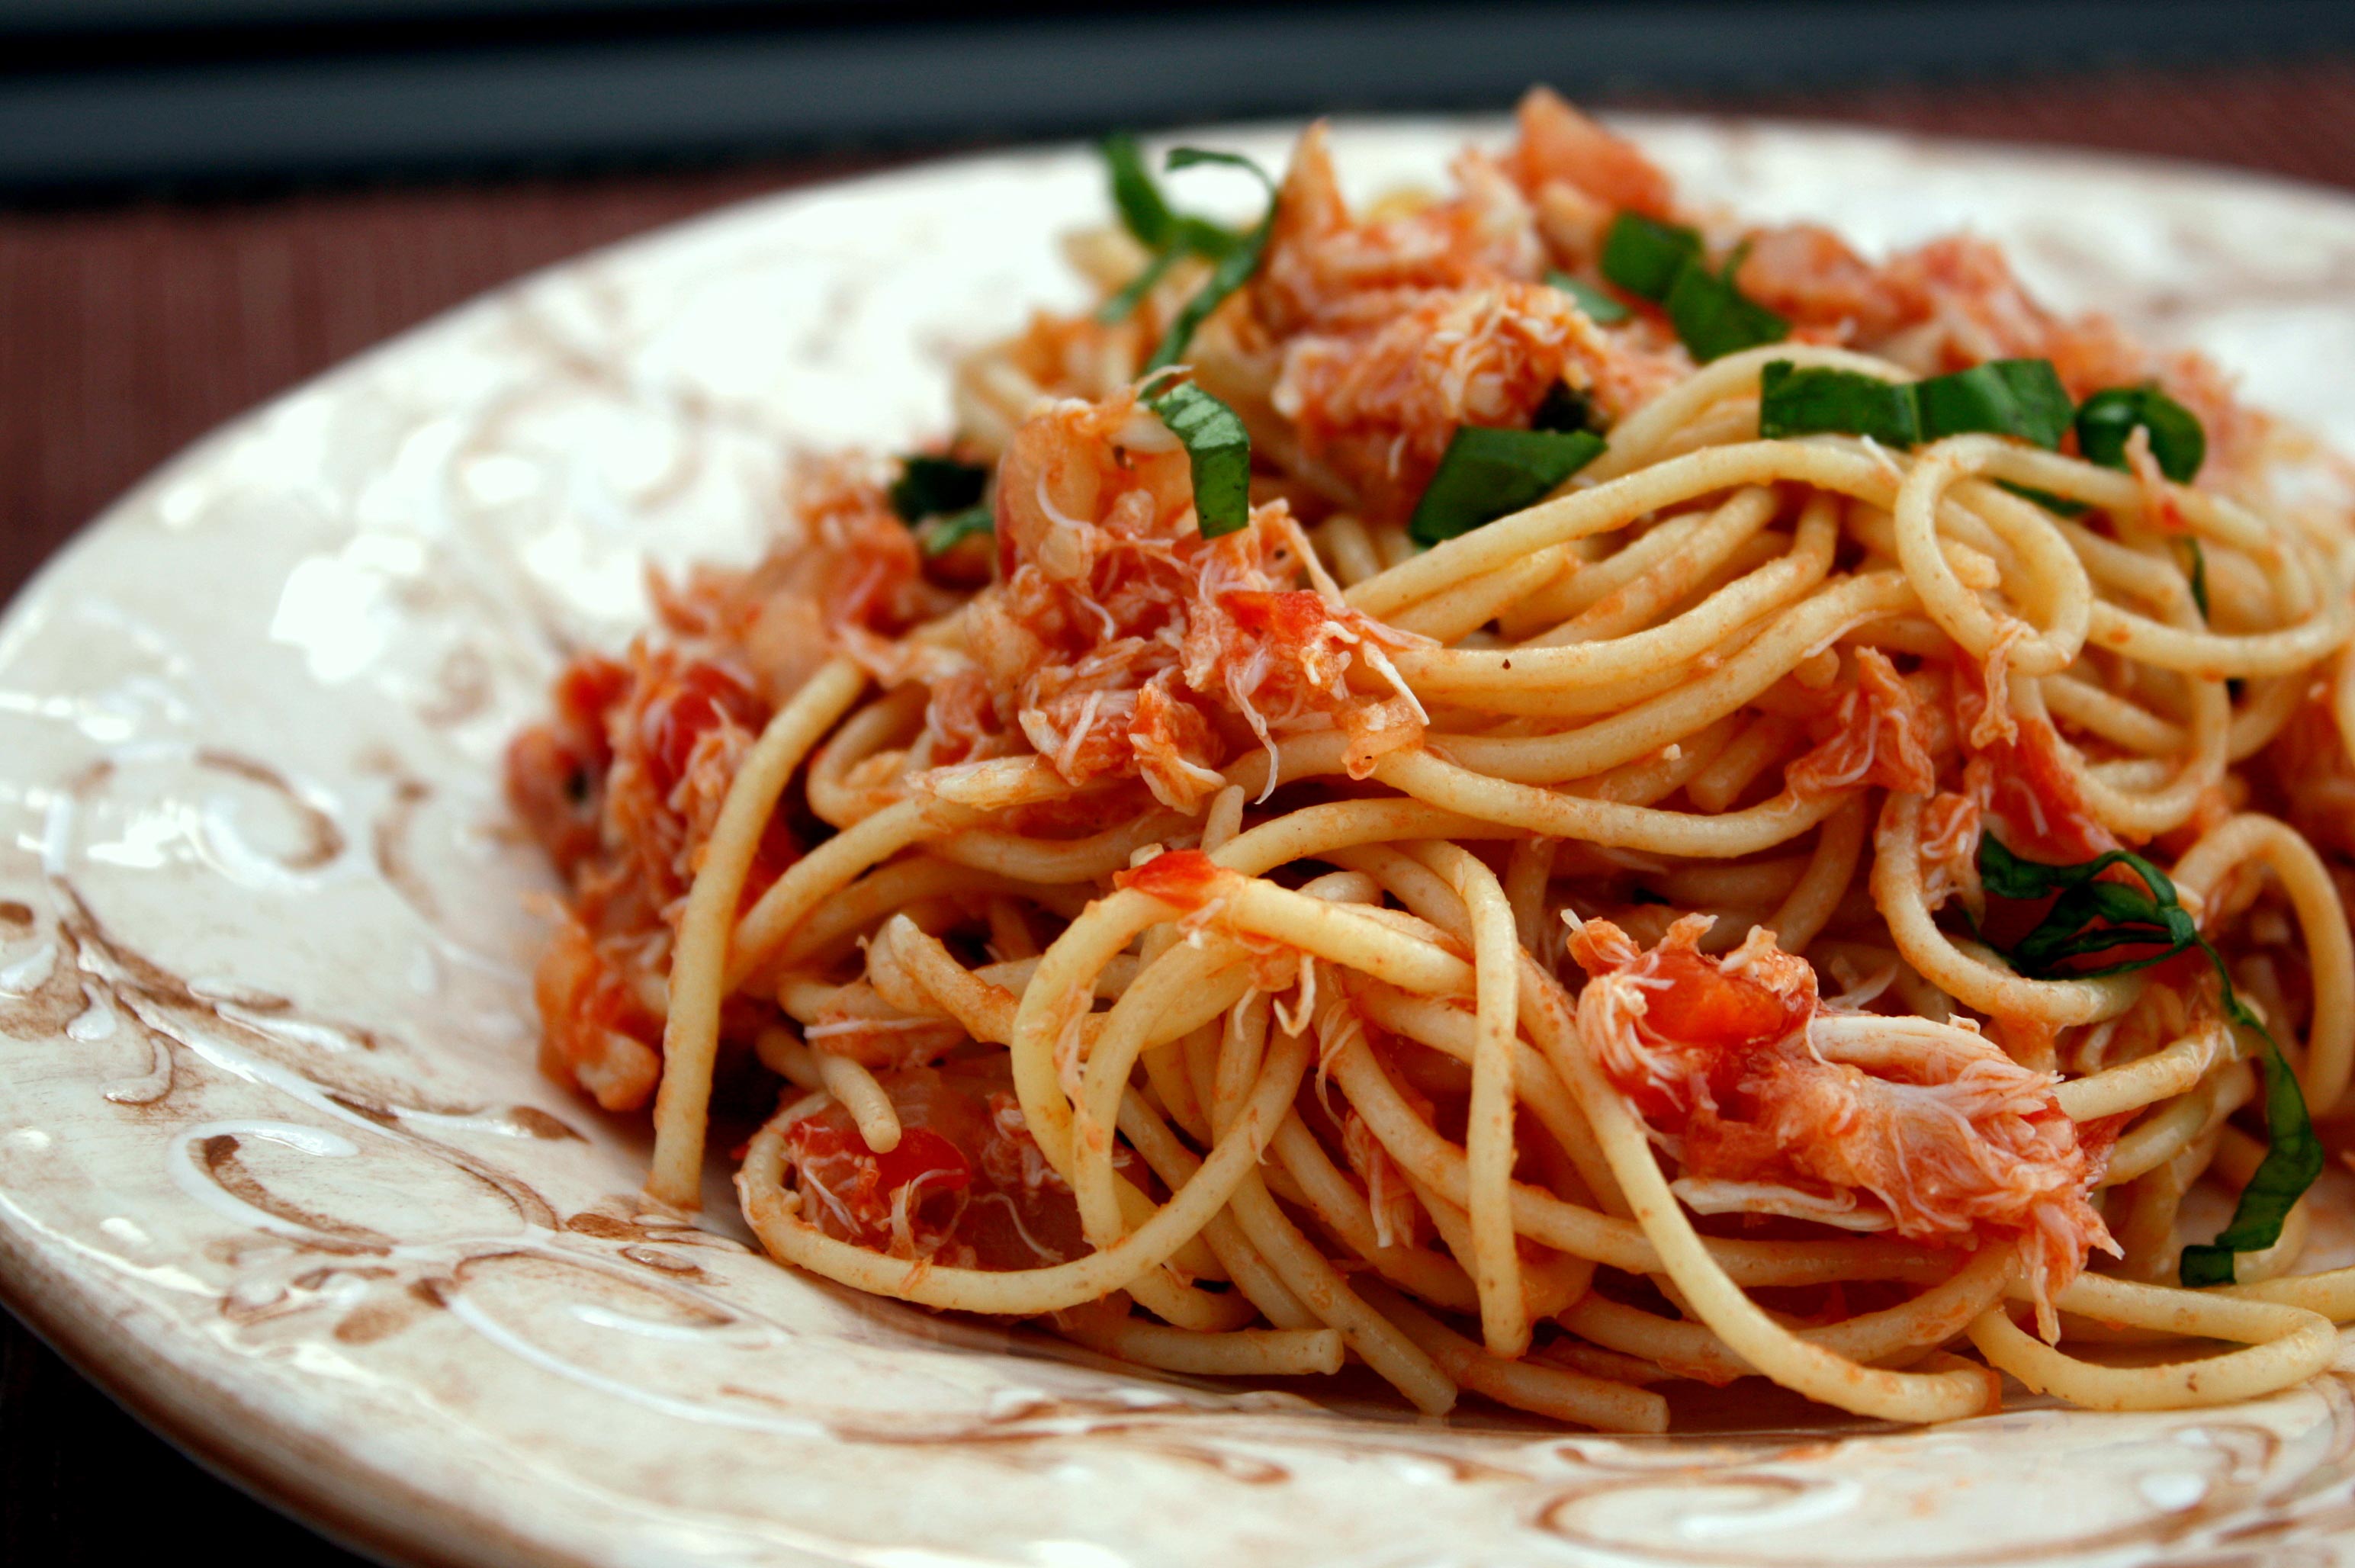 Картинка спагетти. Тальятелле аматричана. Итальянская паста. Спагетти. Итальянская кухня спагетти.